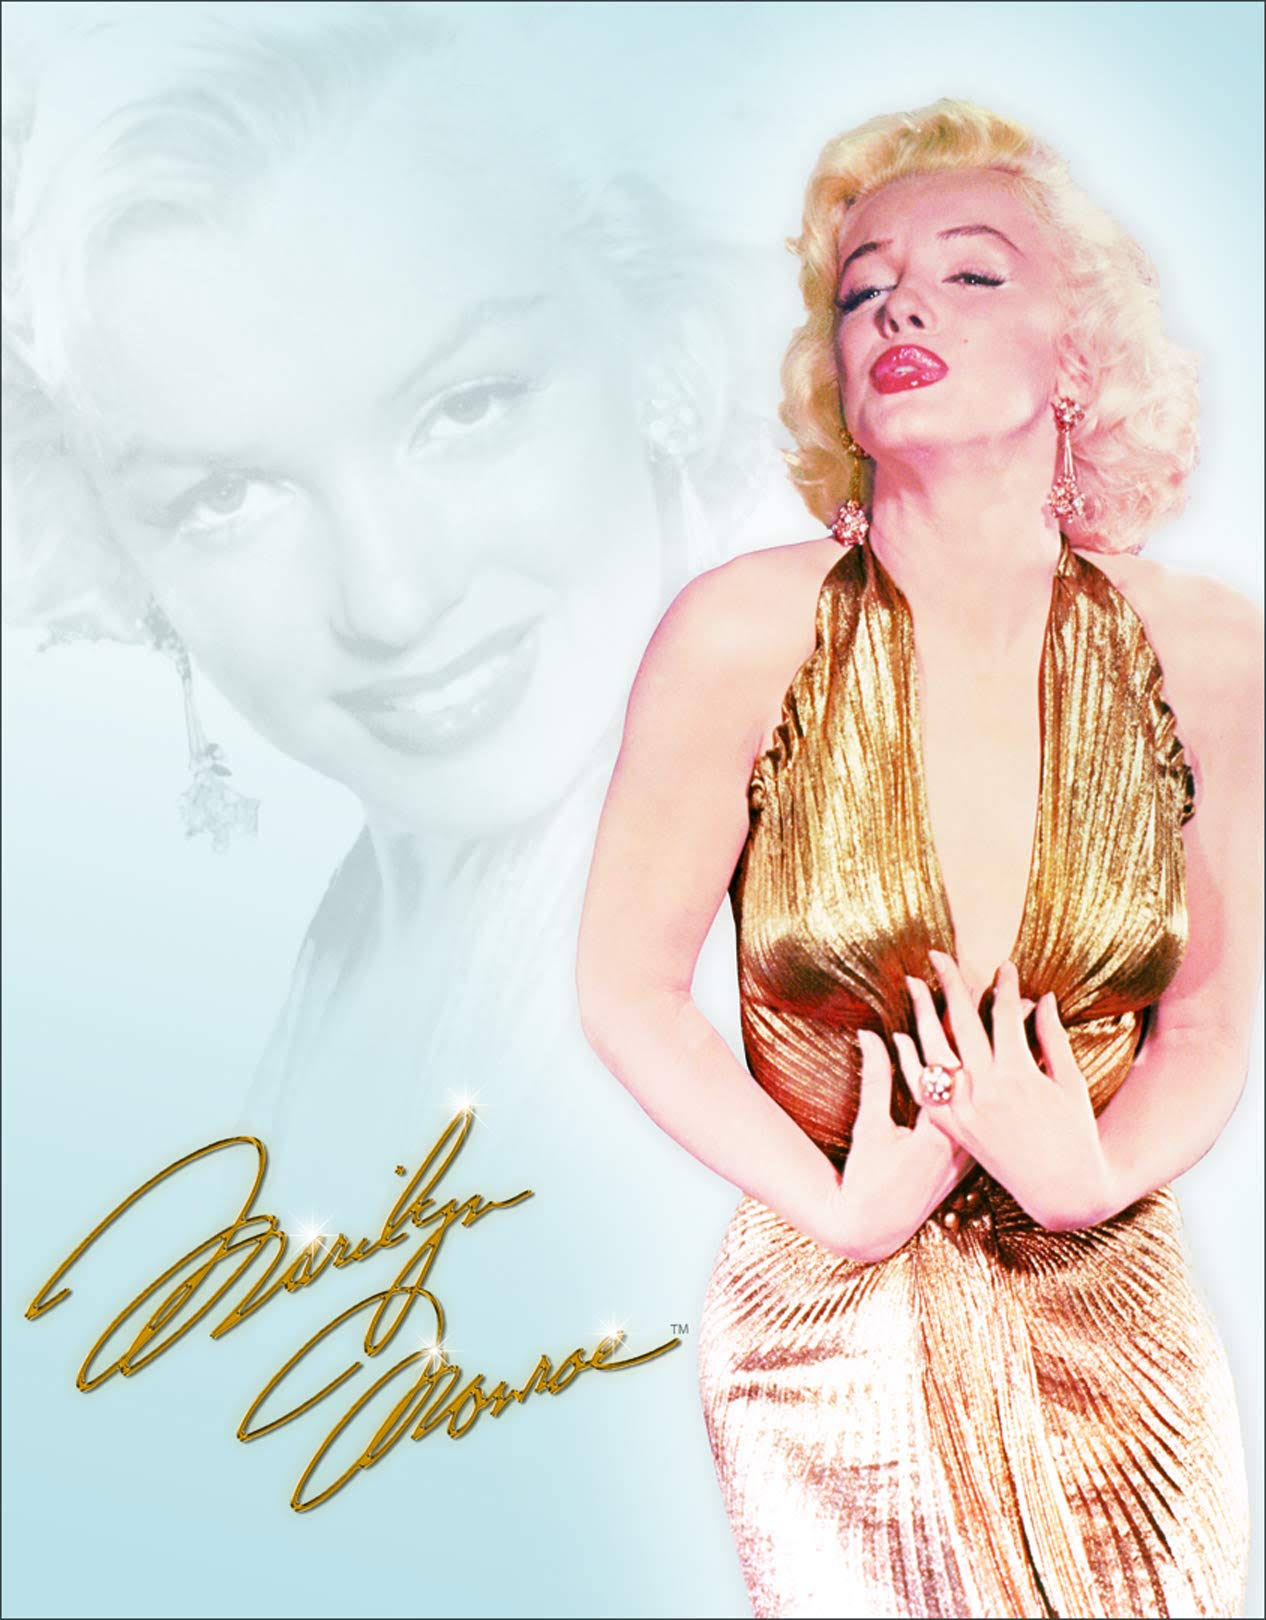 Desperate Enterprises Metal Sign - Marilyn Monroe in Gold Dress, 15.6" x 12.2" x 0.2"